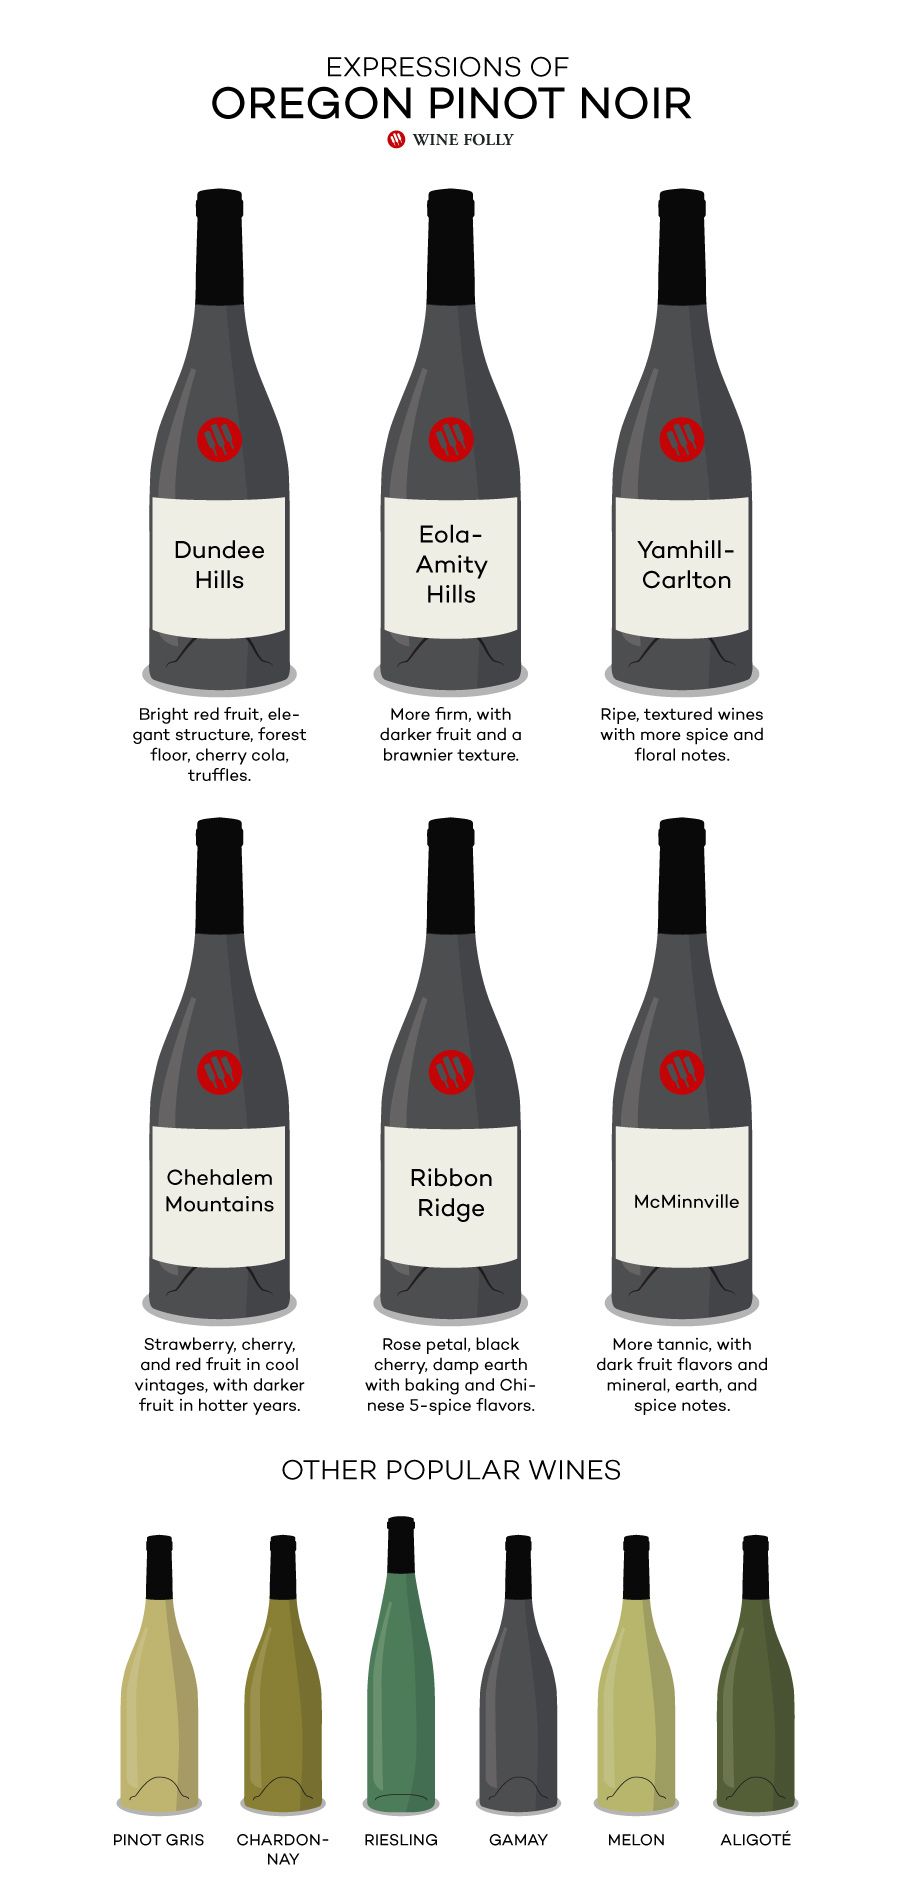 Estilos de Oregon Pinot Noir basados ​​en la subregión - Dundee Hills, Eola-Amity Hills, Yamhill-Carlton, Ribbon Ridge, Chehalem Mountains y McMinnville - por Wine Folly